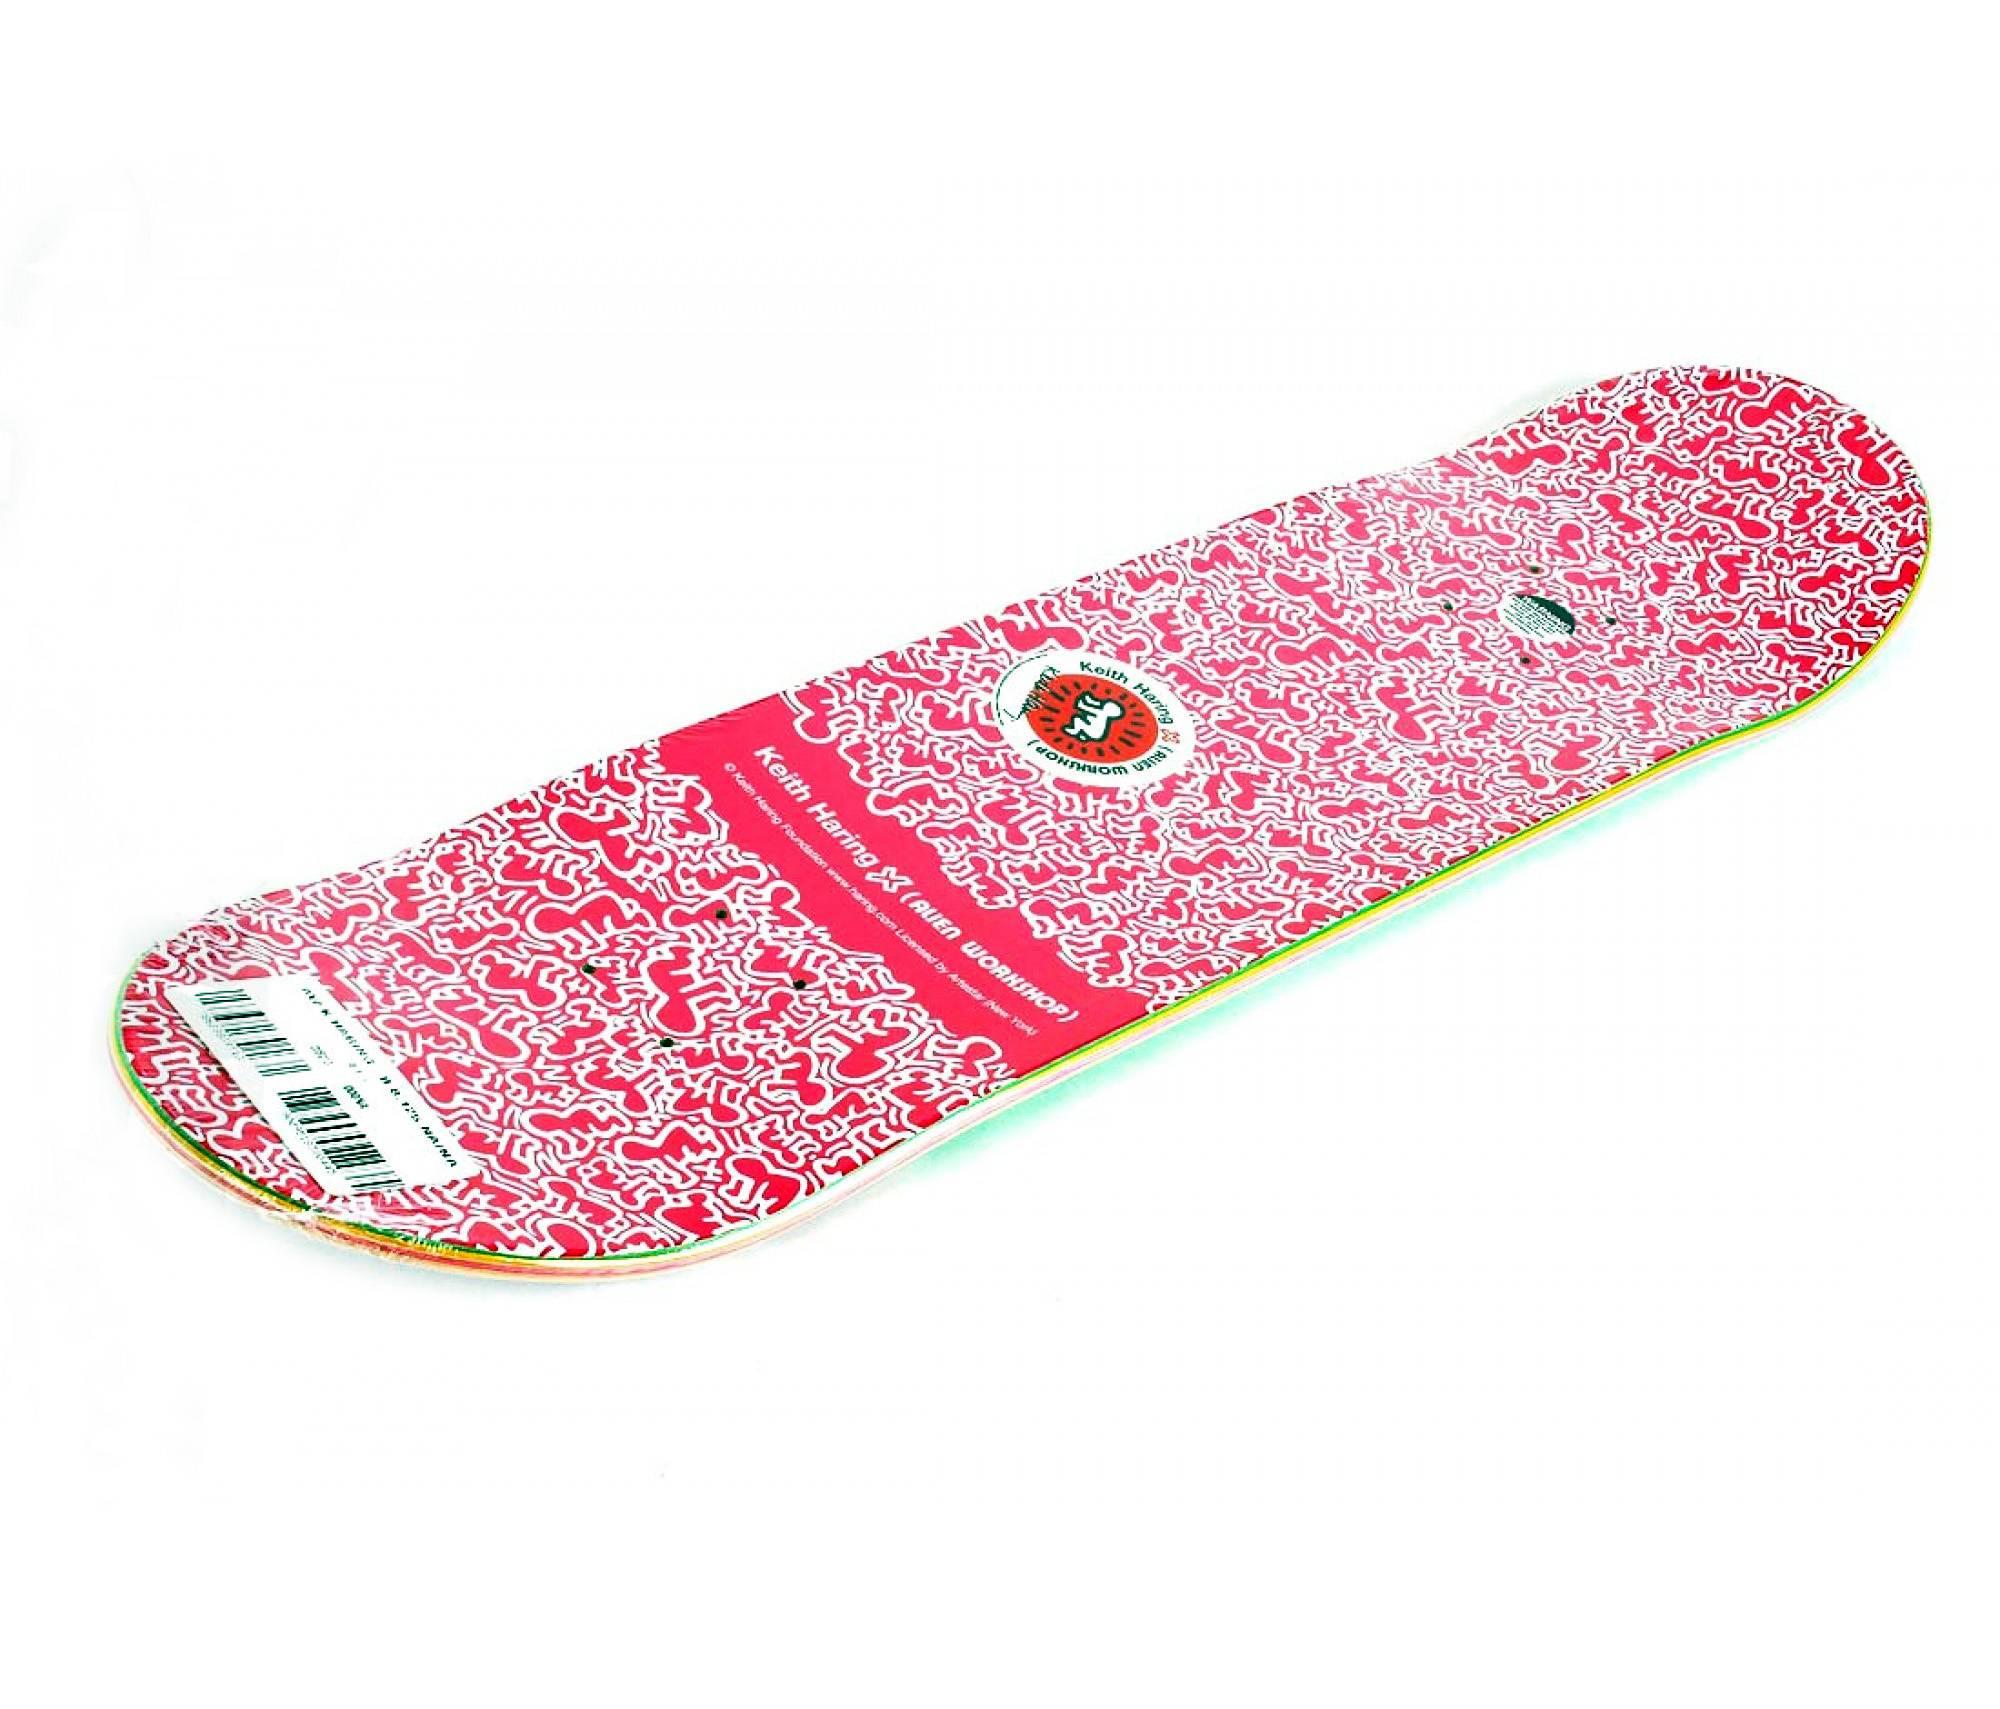 keith haring skateboard deck